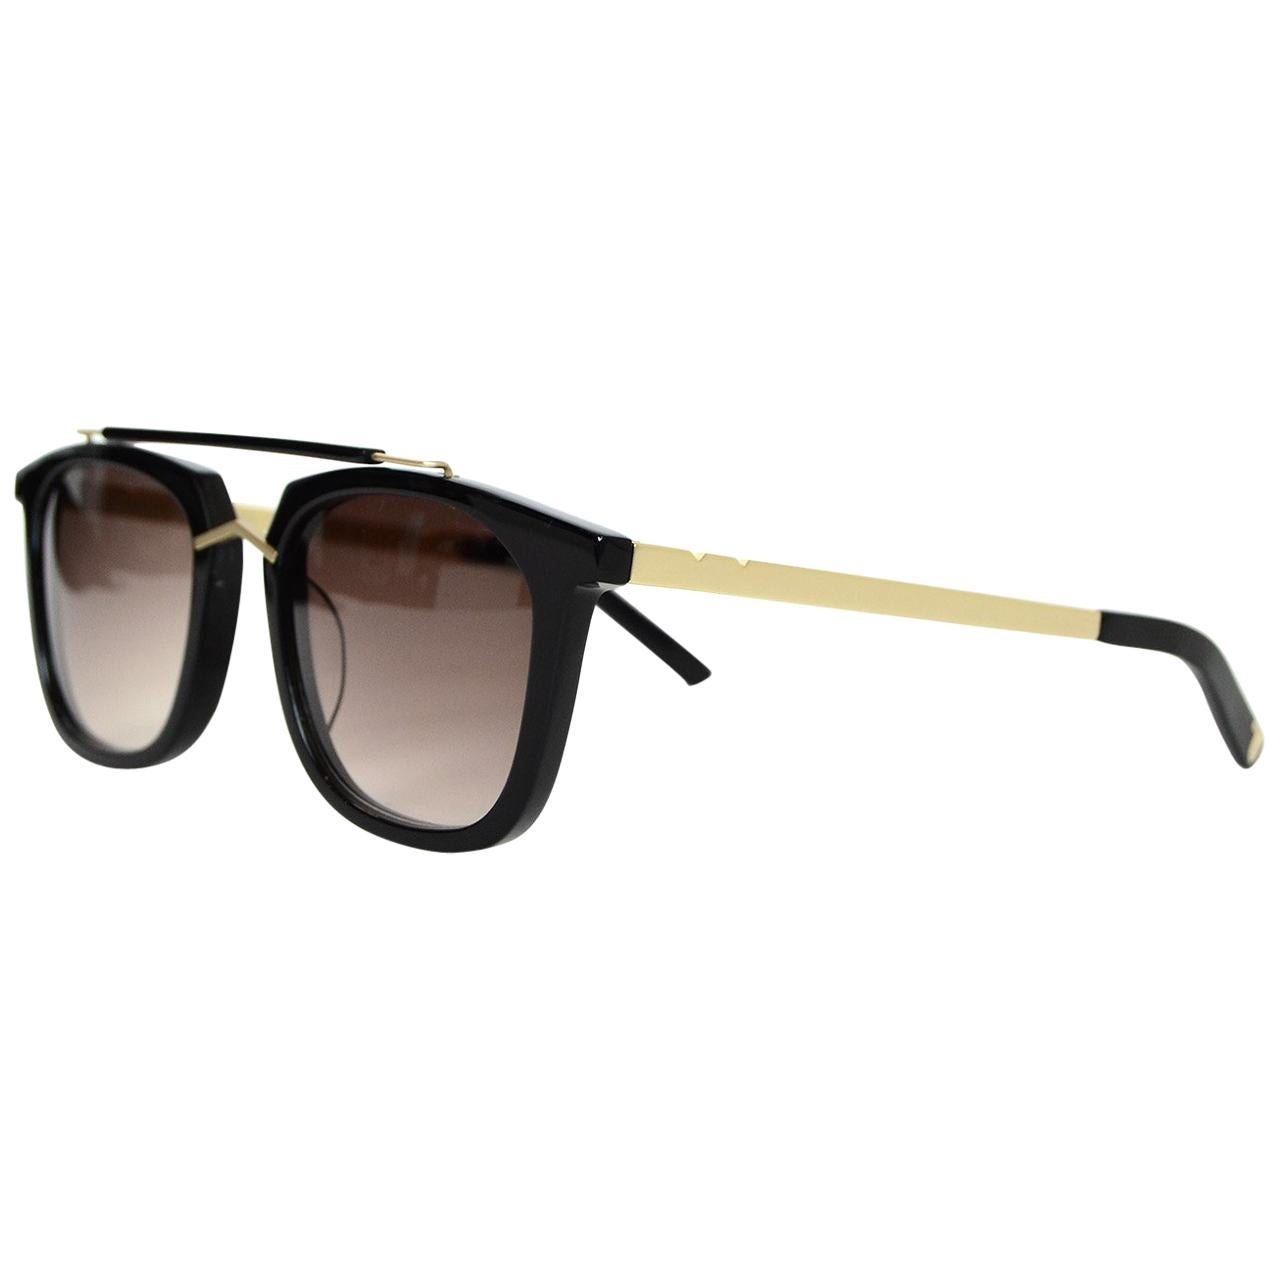 Pared Black/Gold Camels & Caravans Aviator Sunglasses w/ Brown Lenses rt. $270